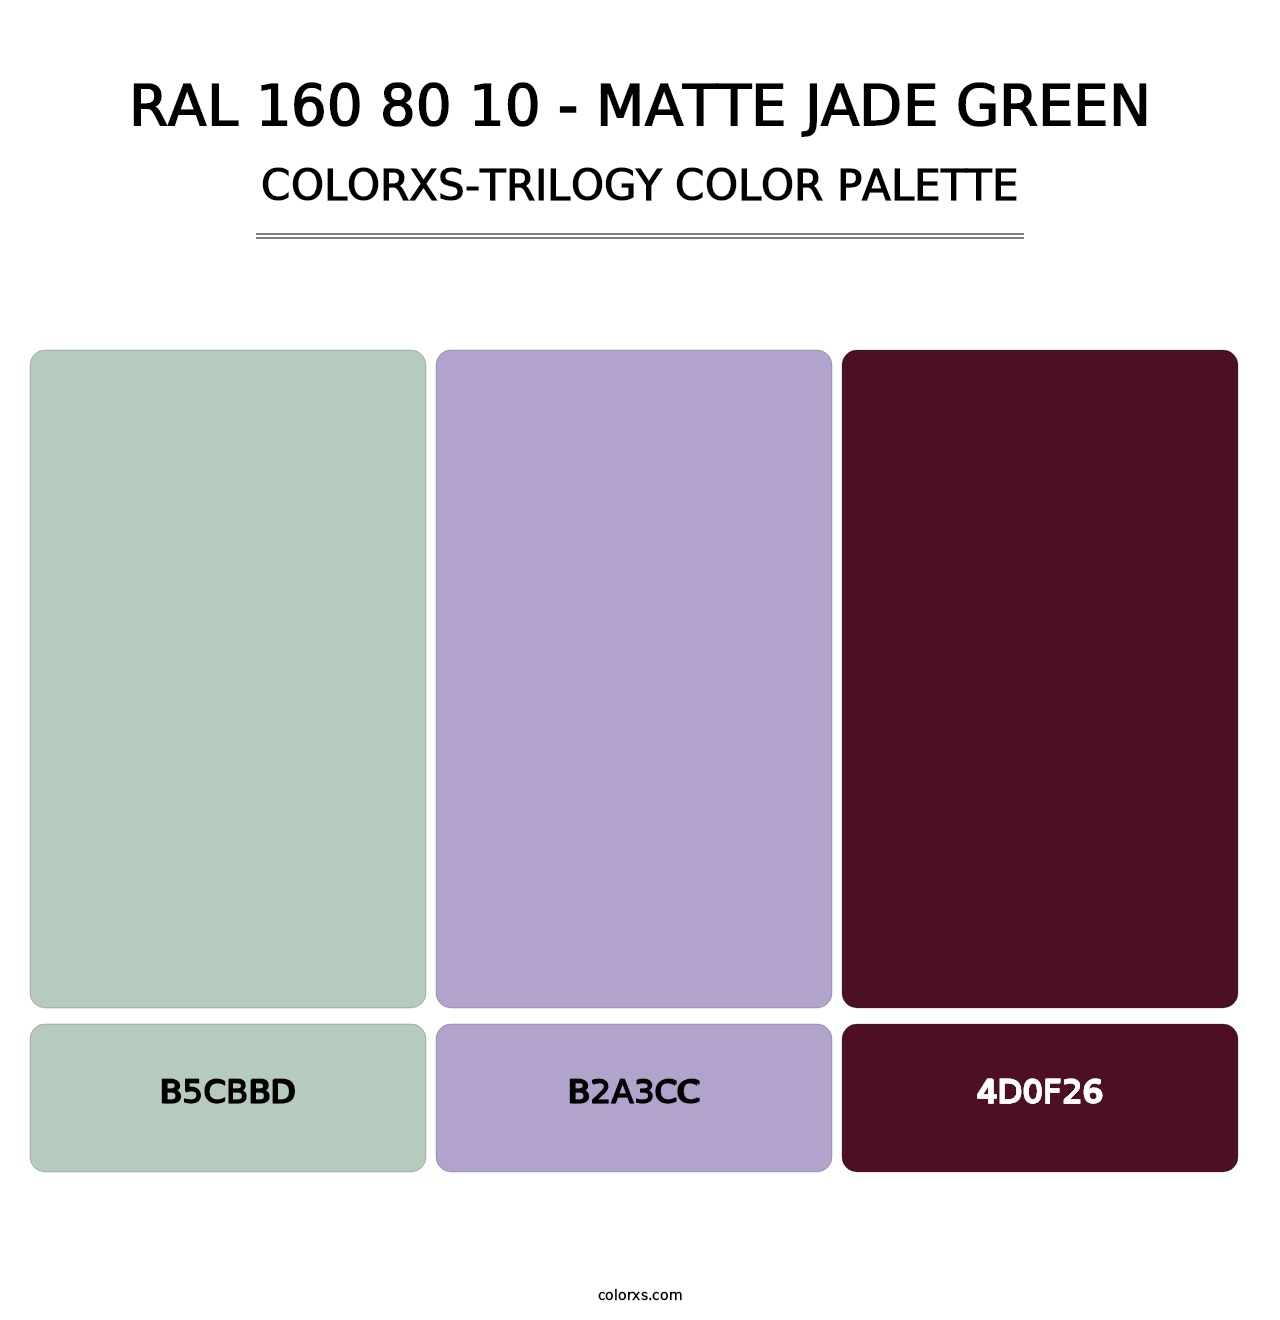 RAL 160 80 10 - Matte Jade Green - Colorxs Trilogy Palette